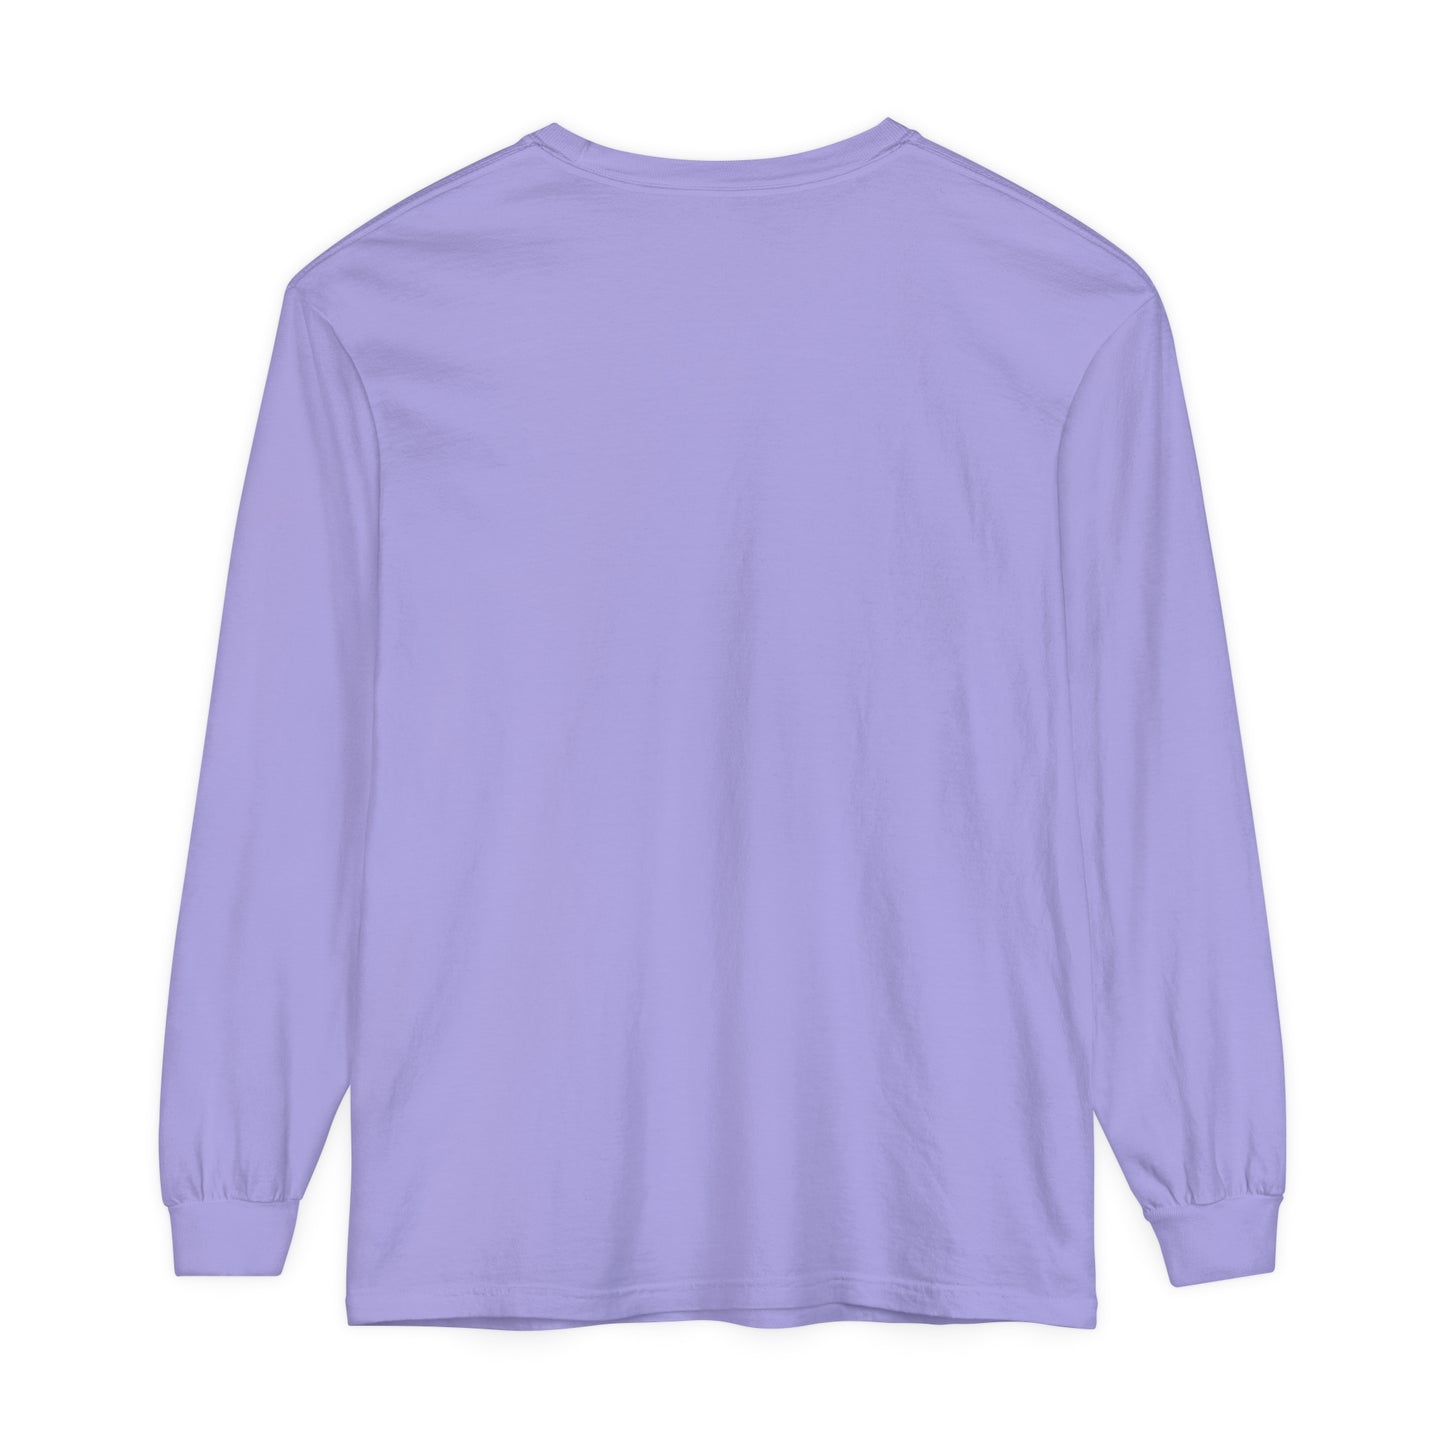 Coffee Mojo • YO Ang • Garment-dyed Long Sleeve T-Shirt